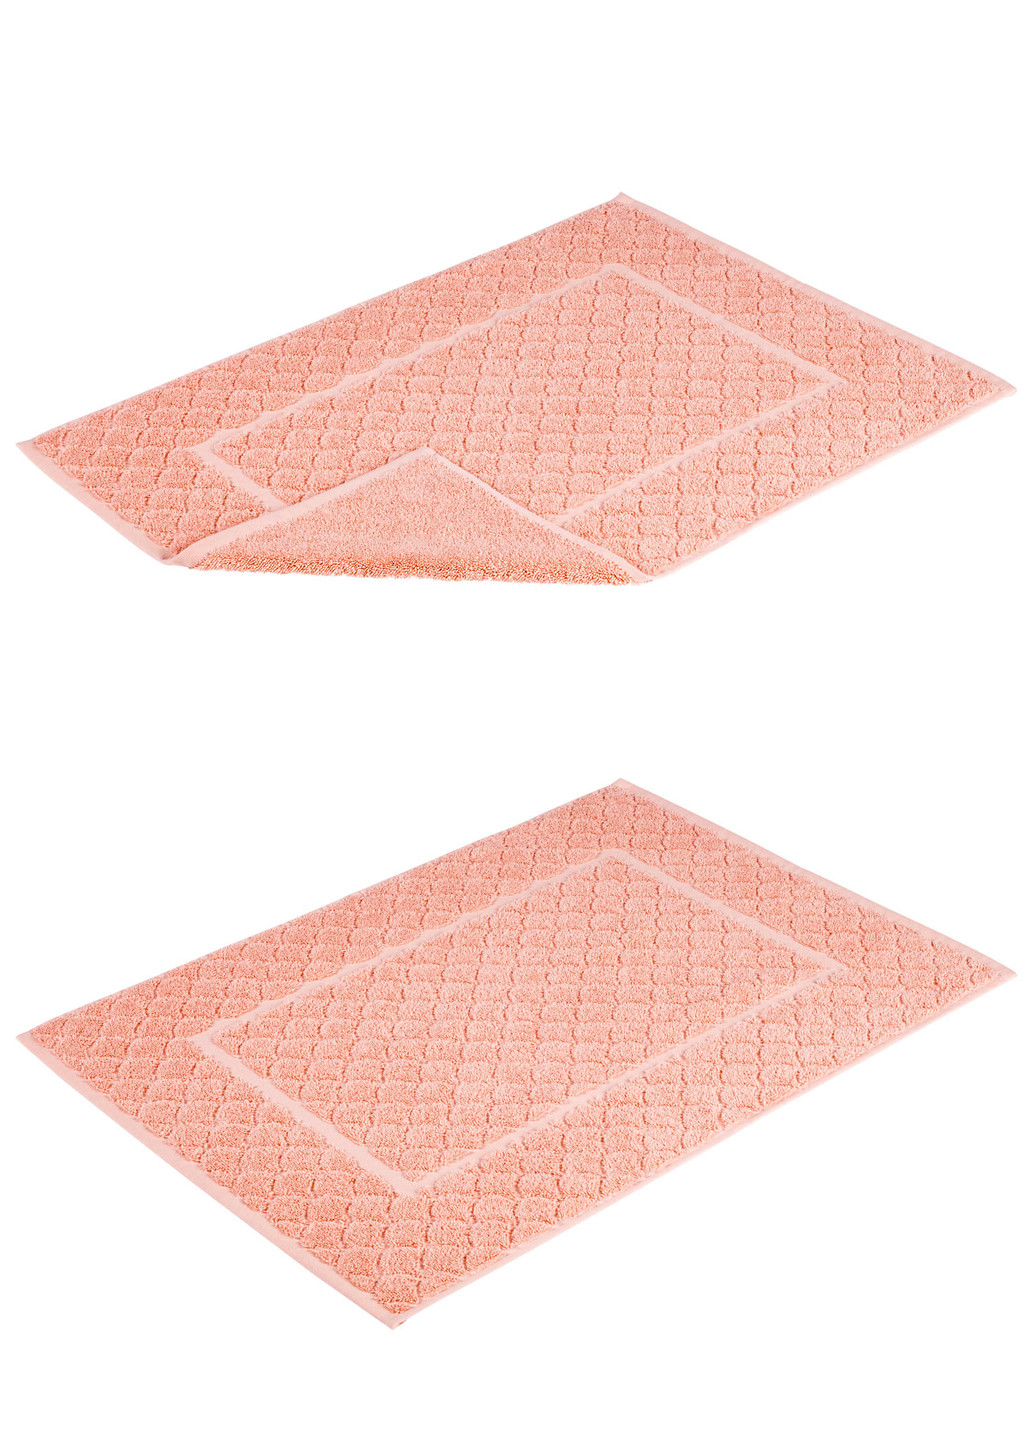 Livarno home полотенца для ног (4 шт) розовый производство - Германия